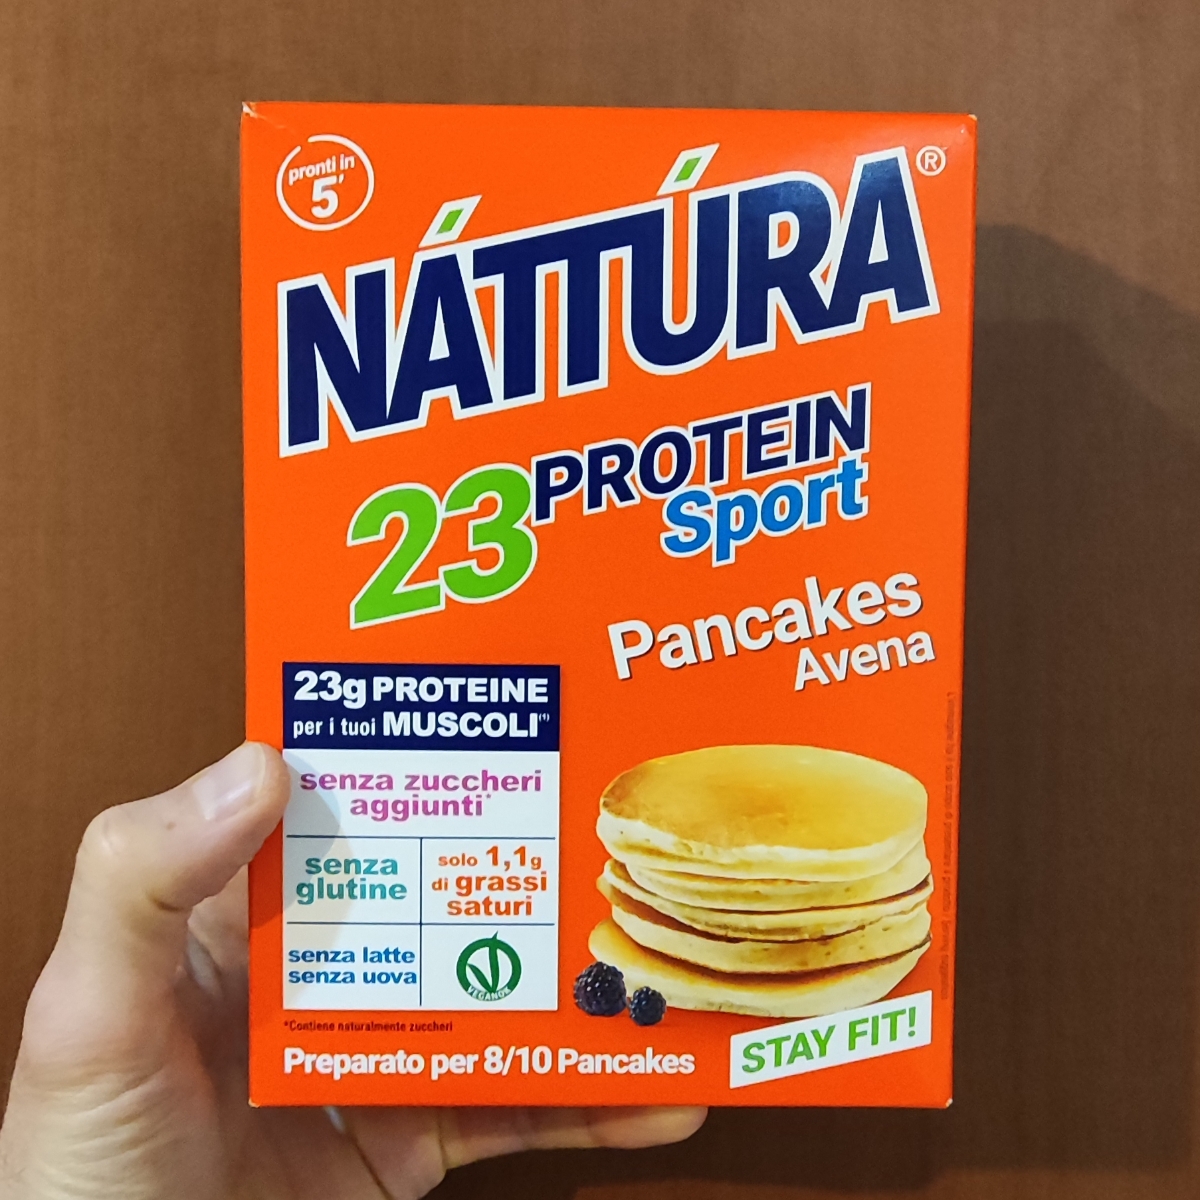 Nattura 23 protein sport pancake avena Review